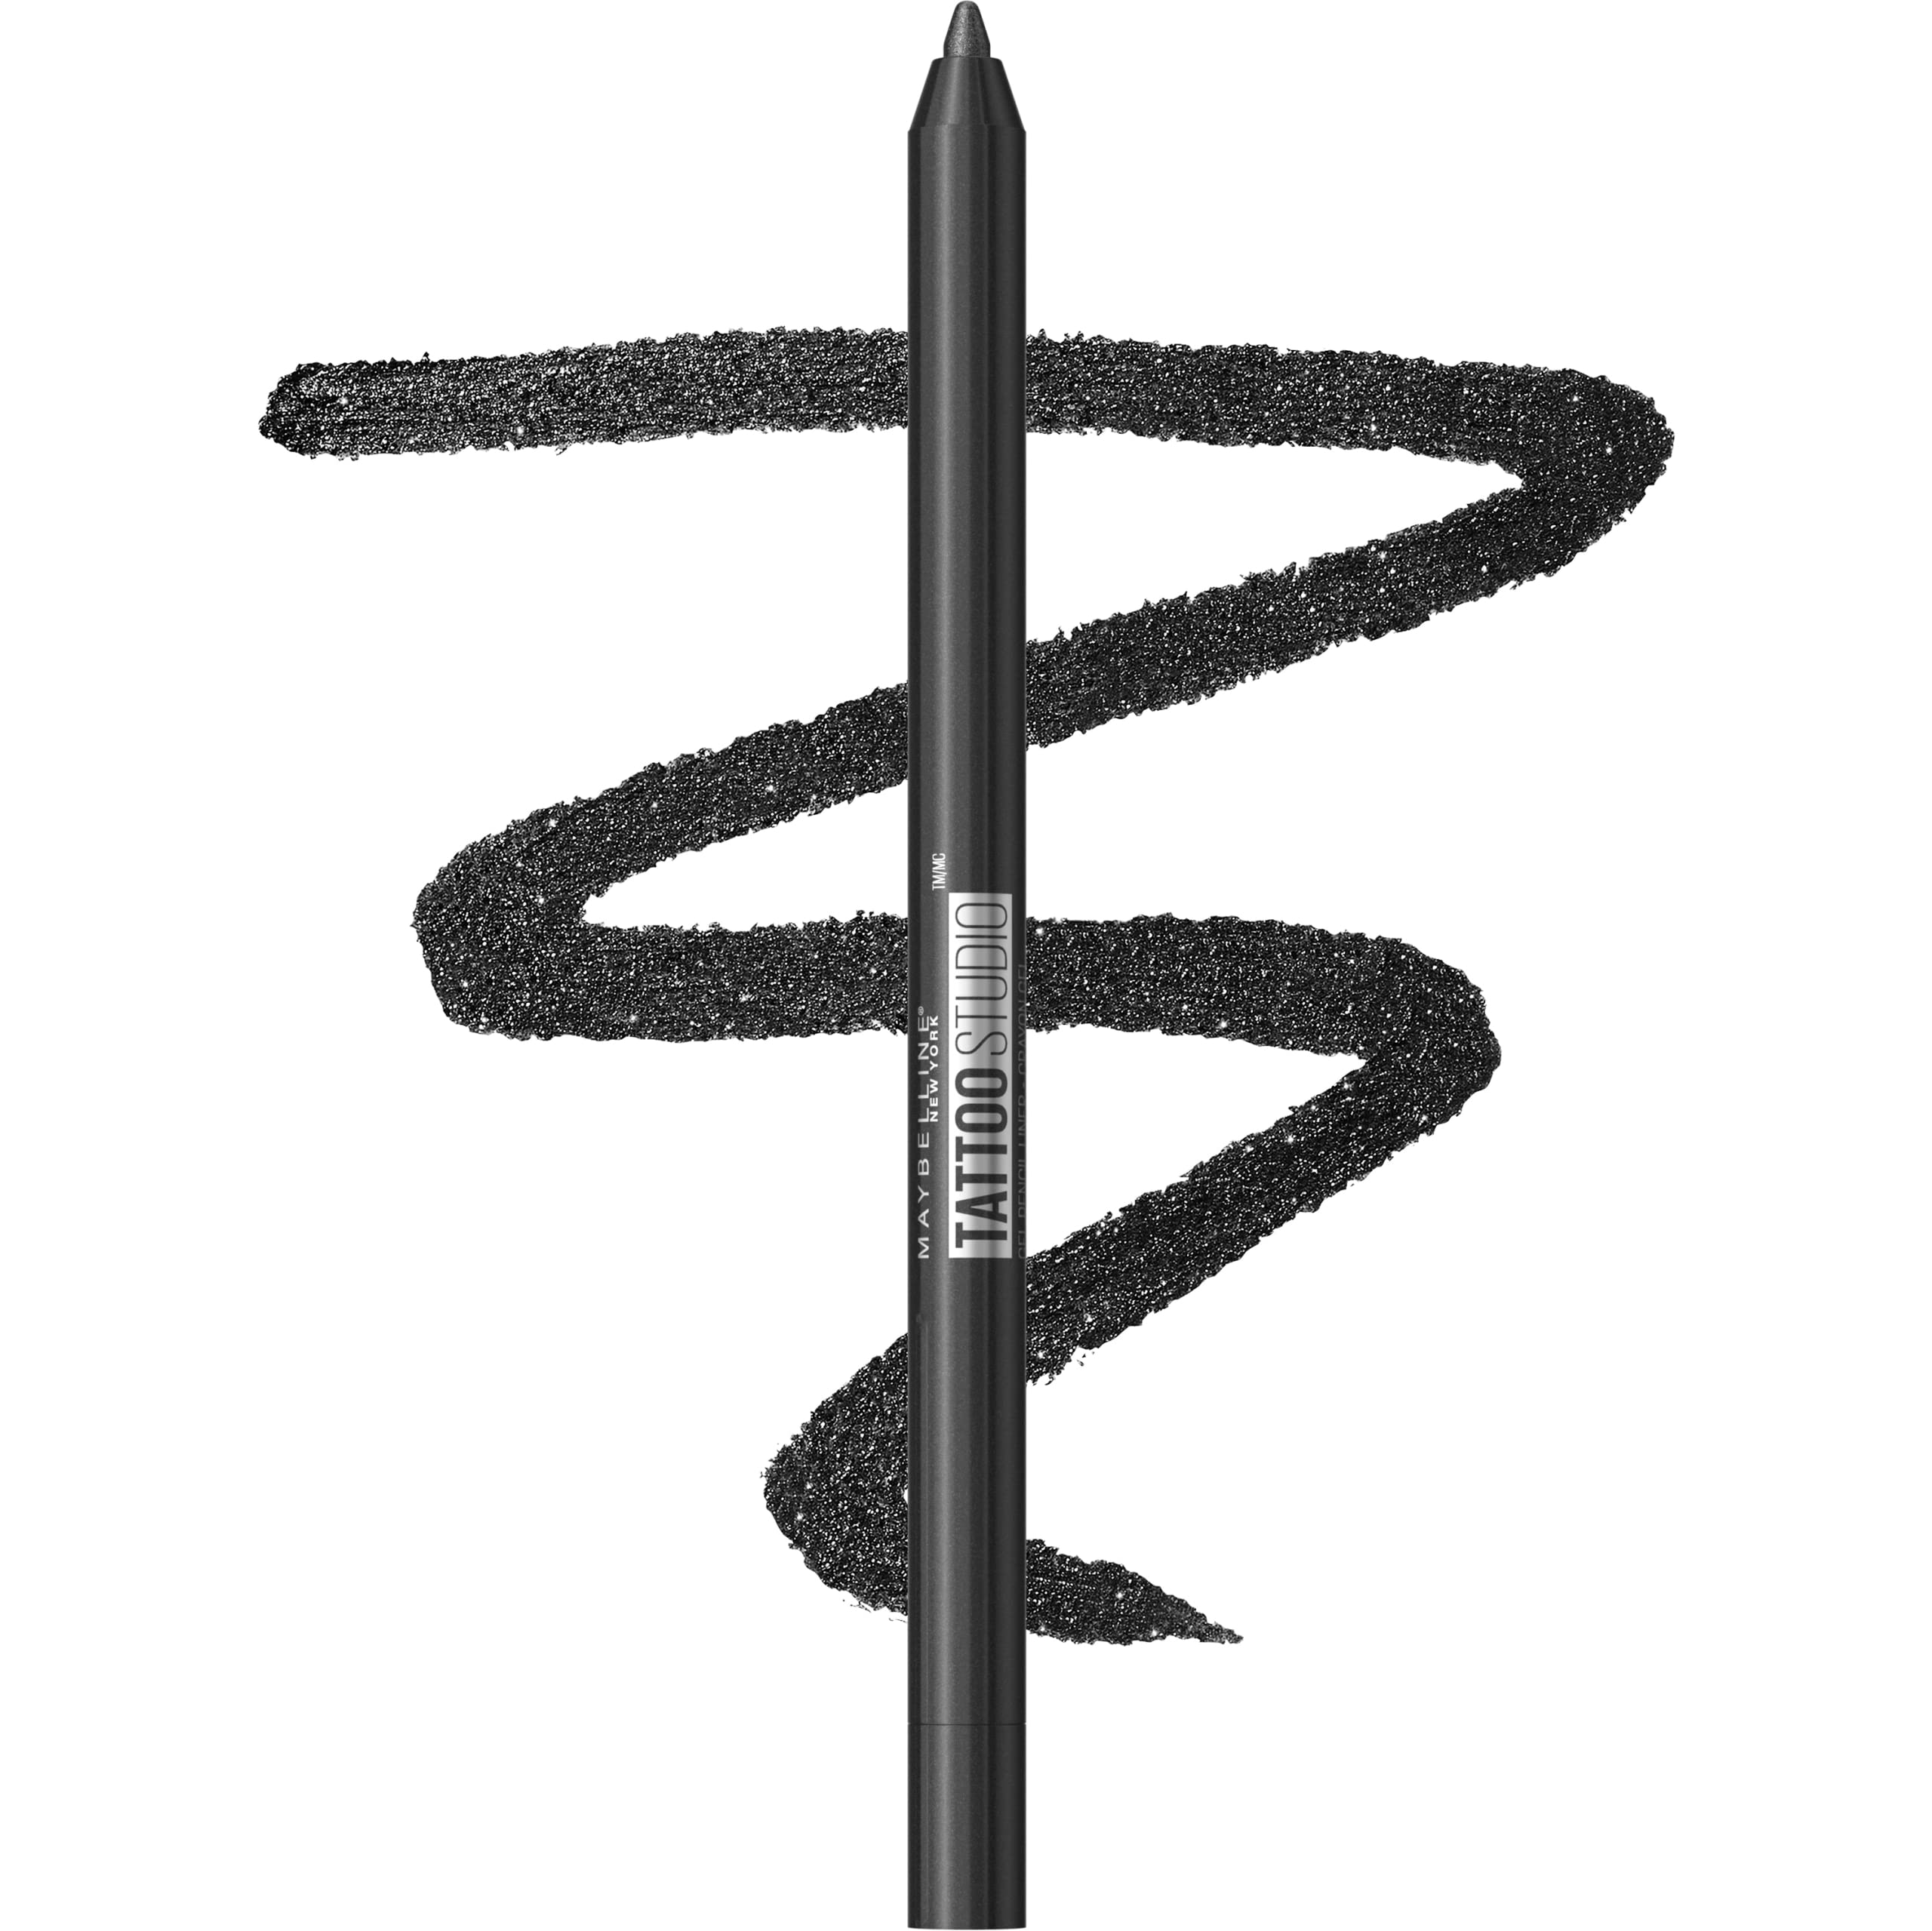 Maybelline New York Tattoo Studio Long-Lasting Sharpenable Eyeliner Pencil  Glide on Smooth Gel Pigments with 36 Hour Wear Waterproof Metallic Nights  0.04 oz | Mascara